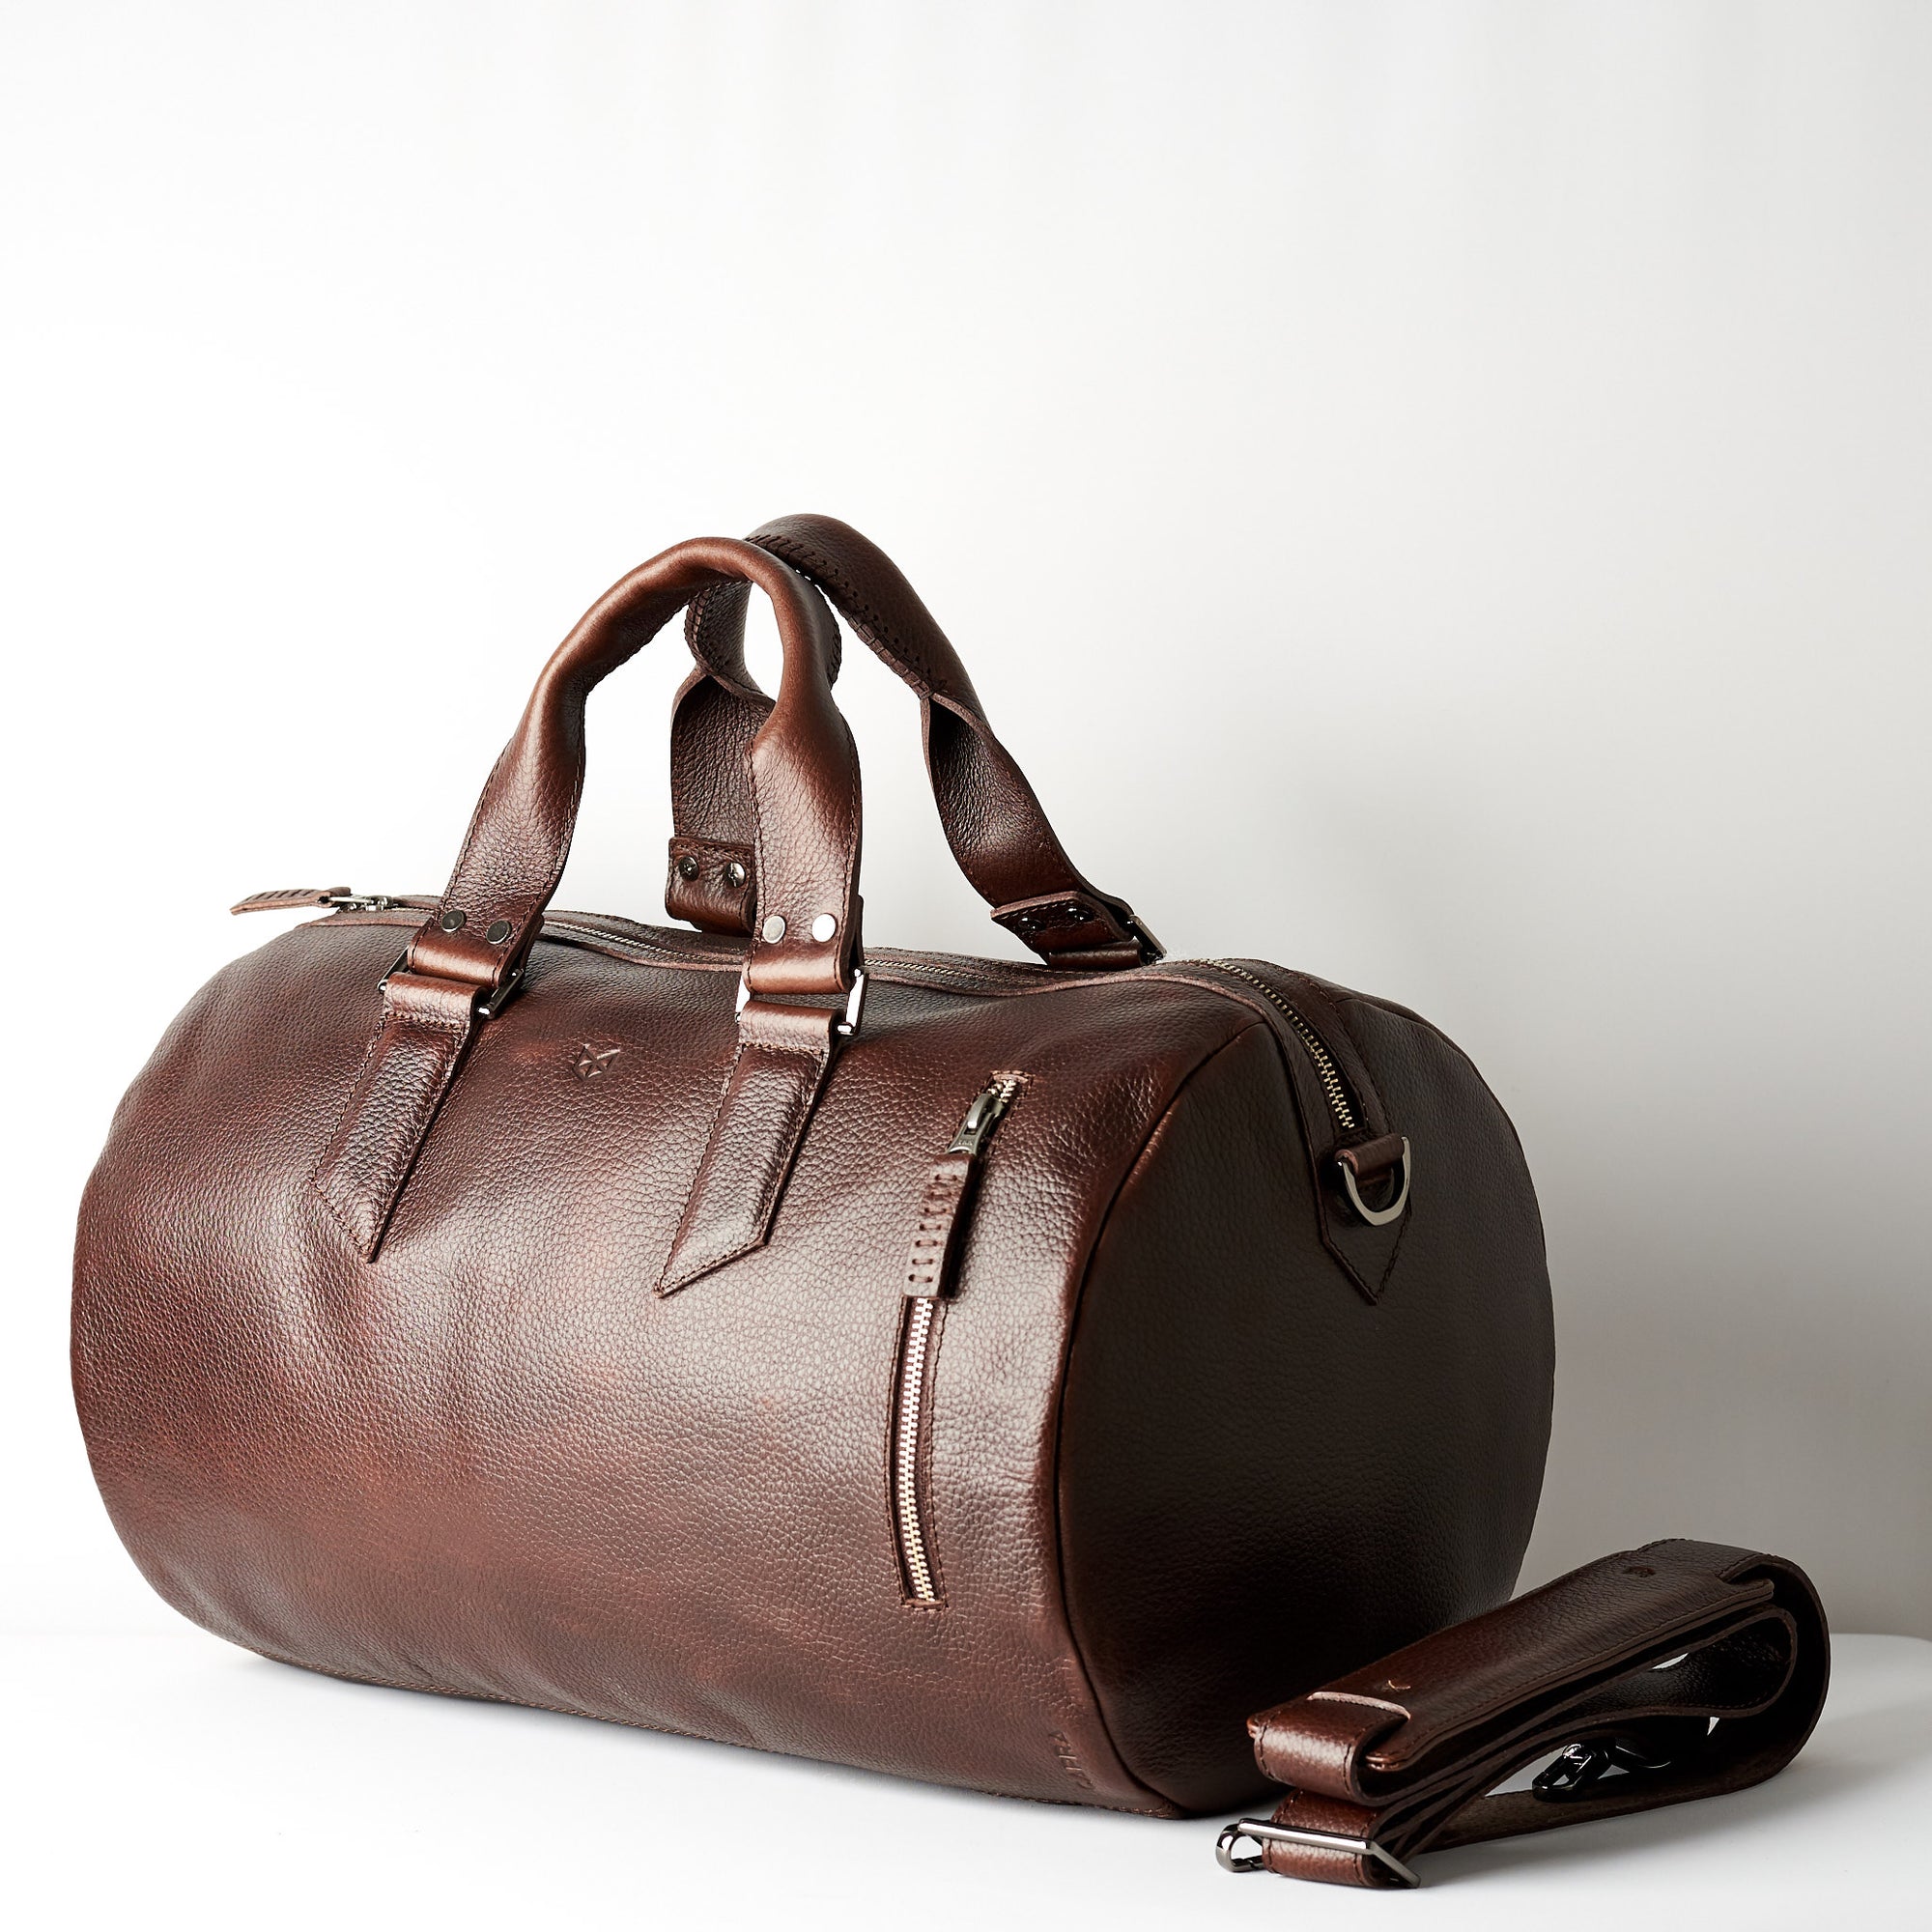 Duffle with padded shoulder strap. Dark brown leather carryall bag. Mens travel weekender bag